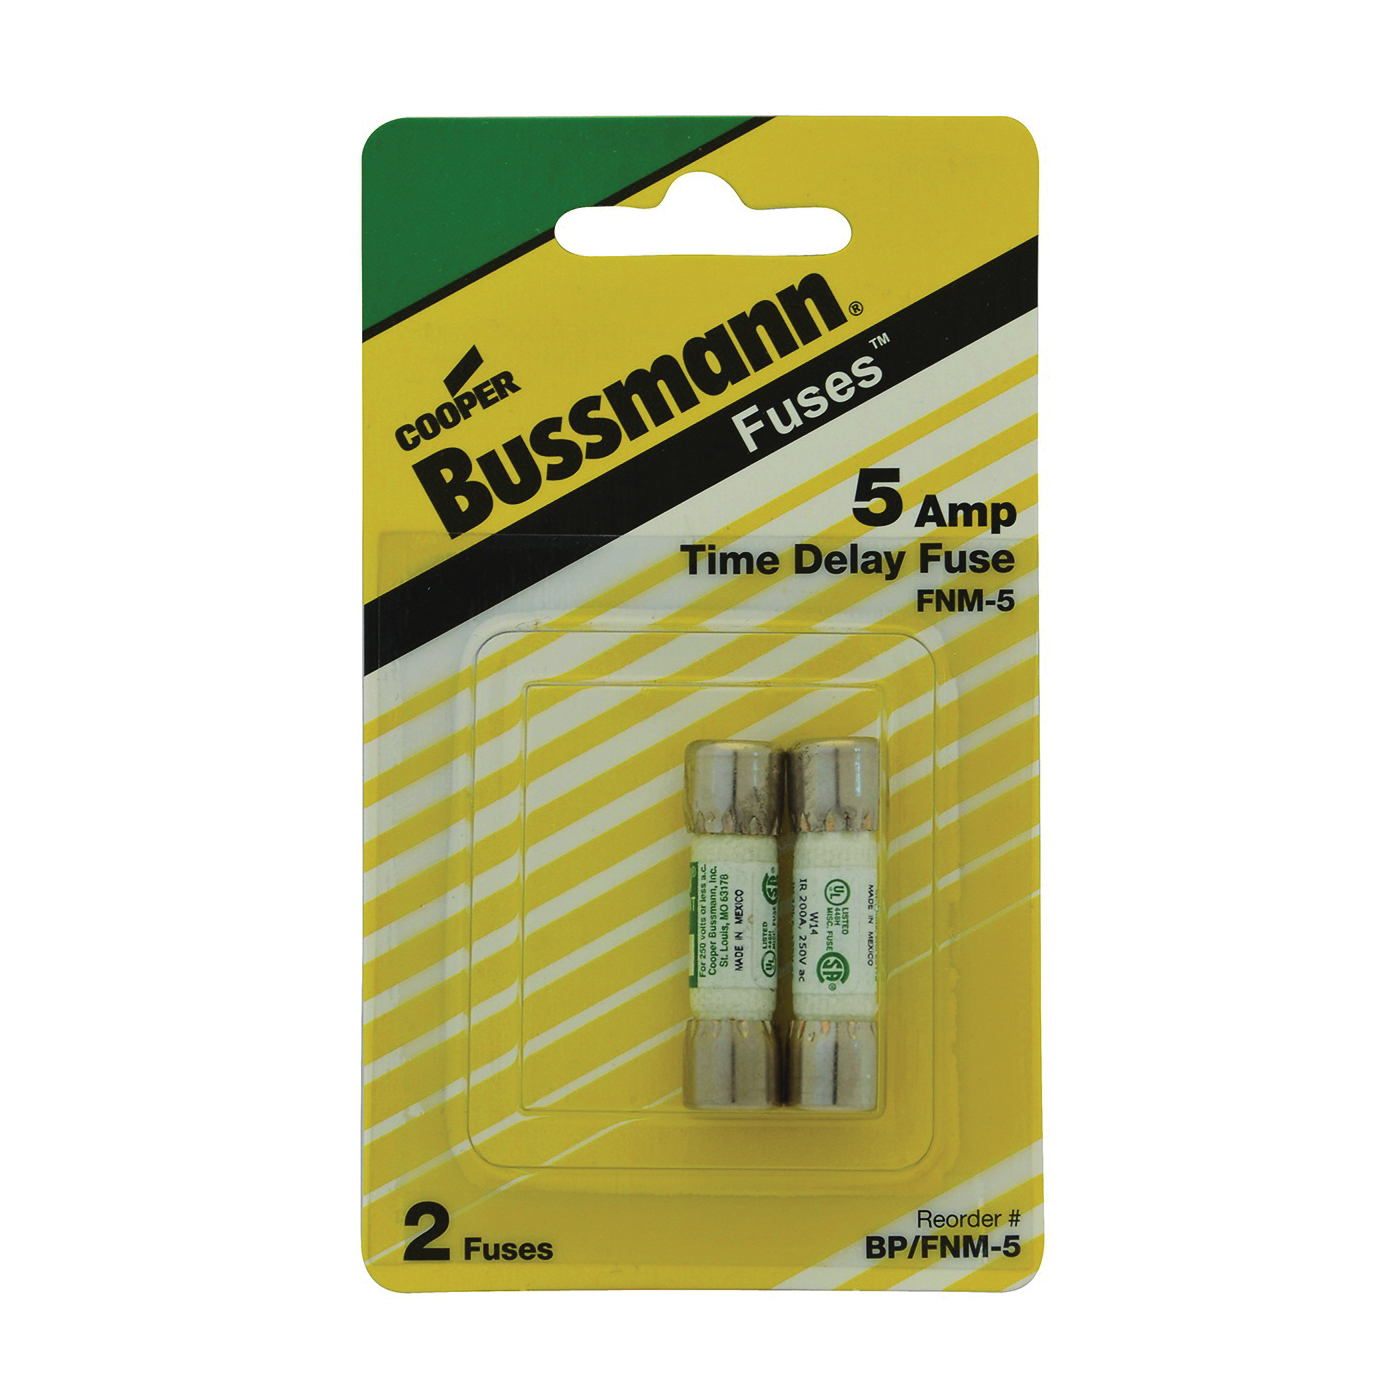 Bussmann BP/FNM-5 Time Delay Fuse, 5 A, 250 V, 200 A, 10 kA Interrupt, Melamine Body